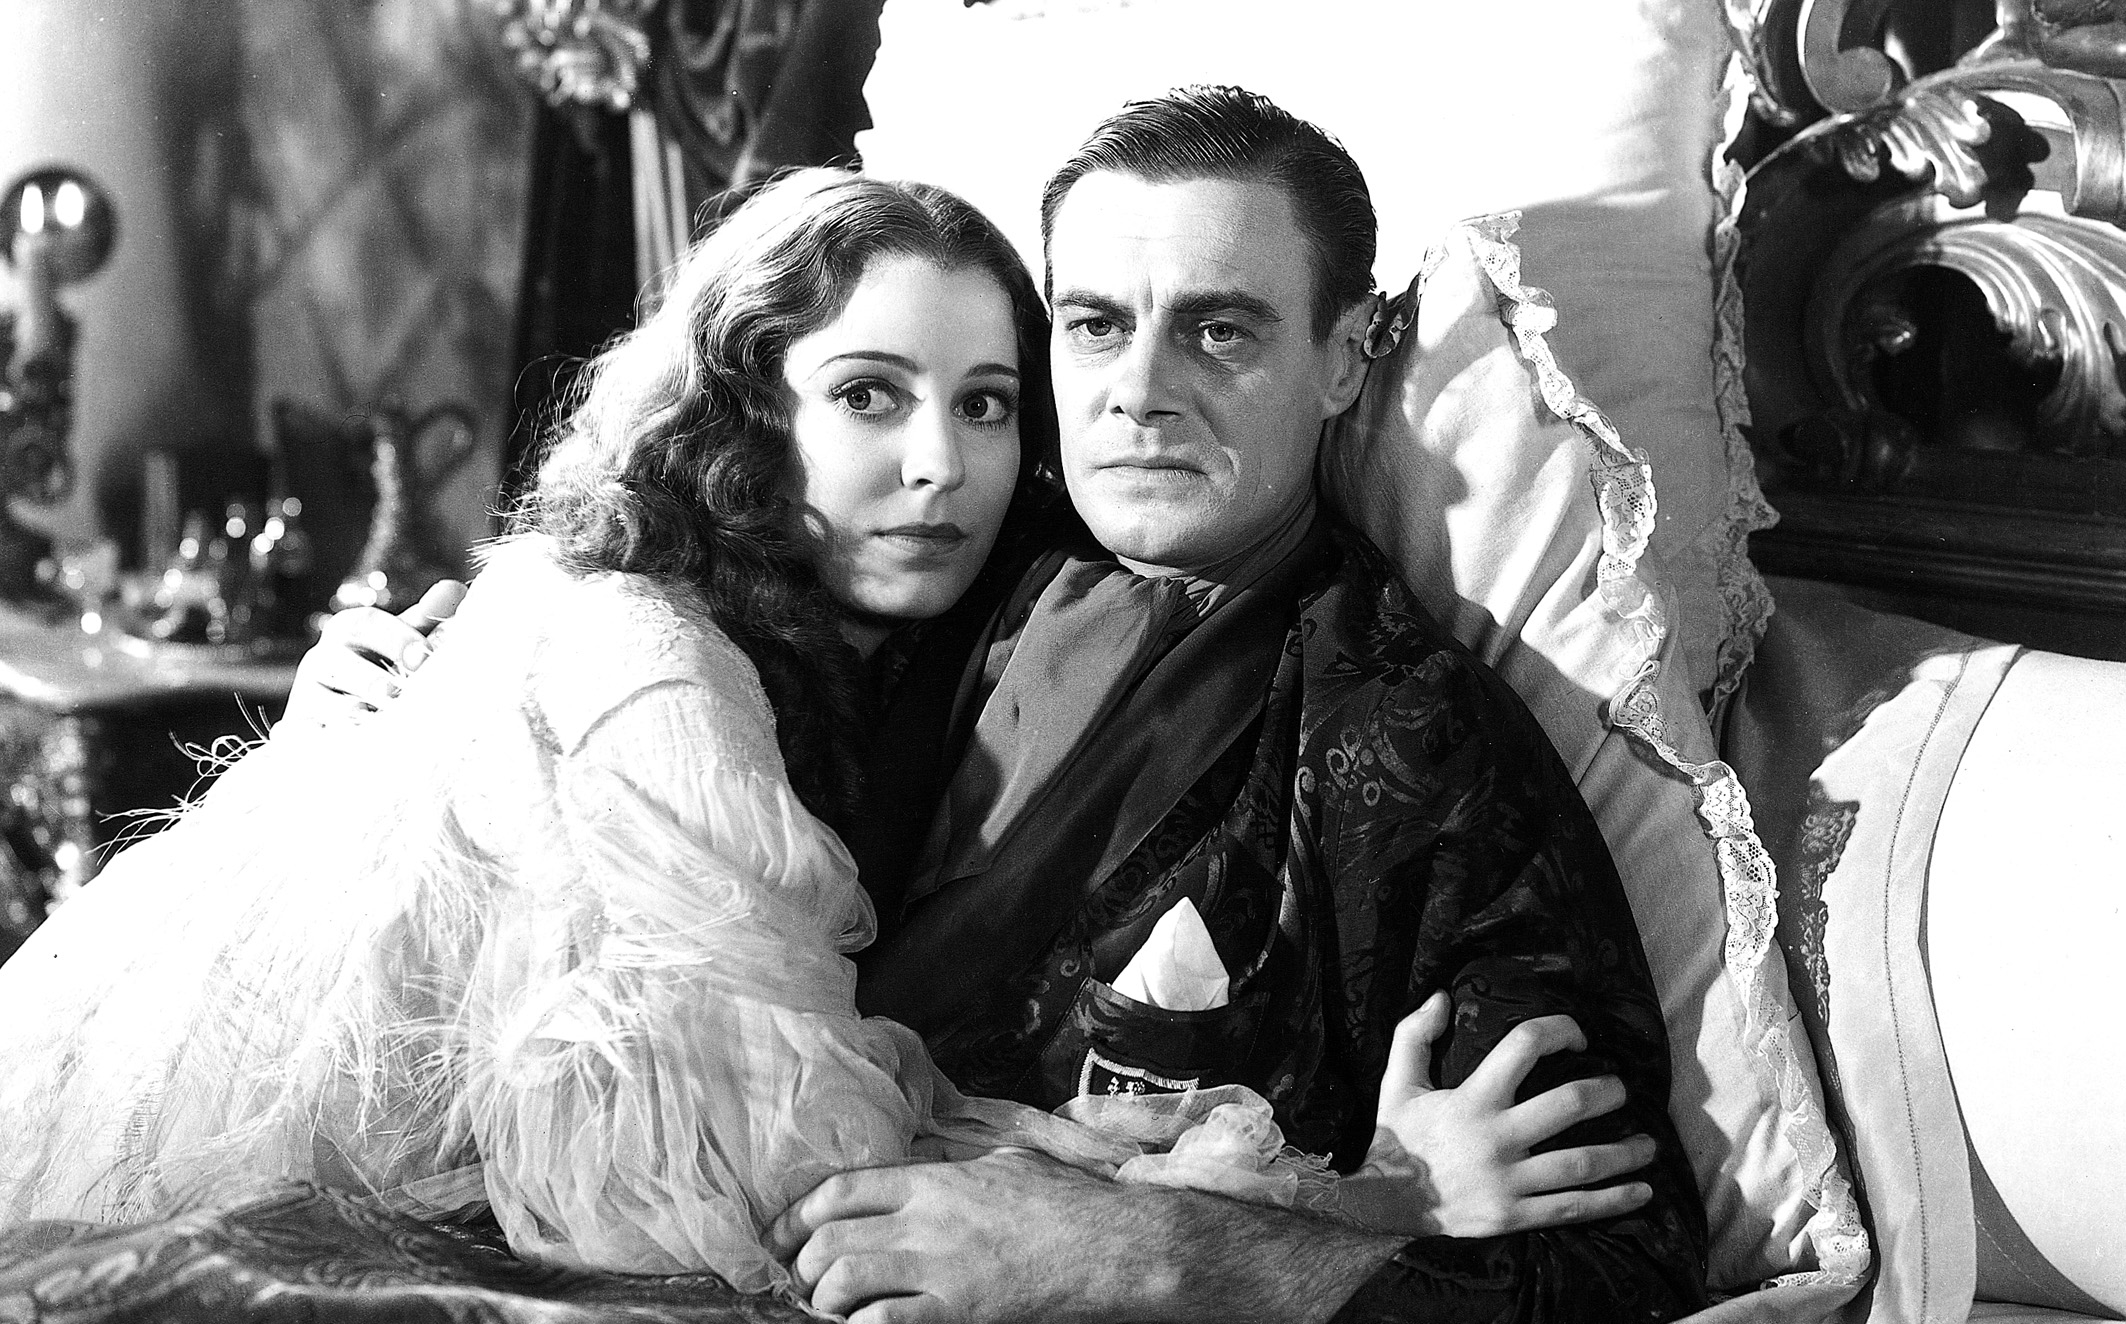 Image du film La Fiancée de Frankenstein 72e1636a-683e-4391-833d-1df5a728c3f7